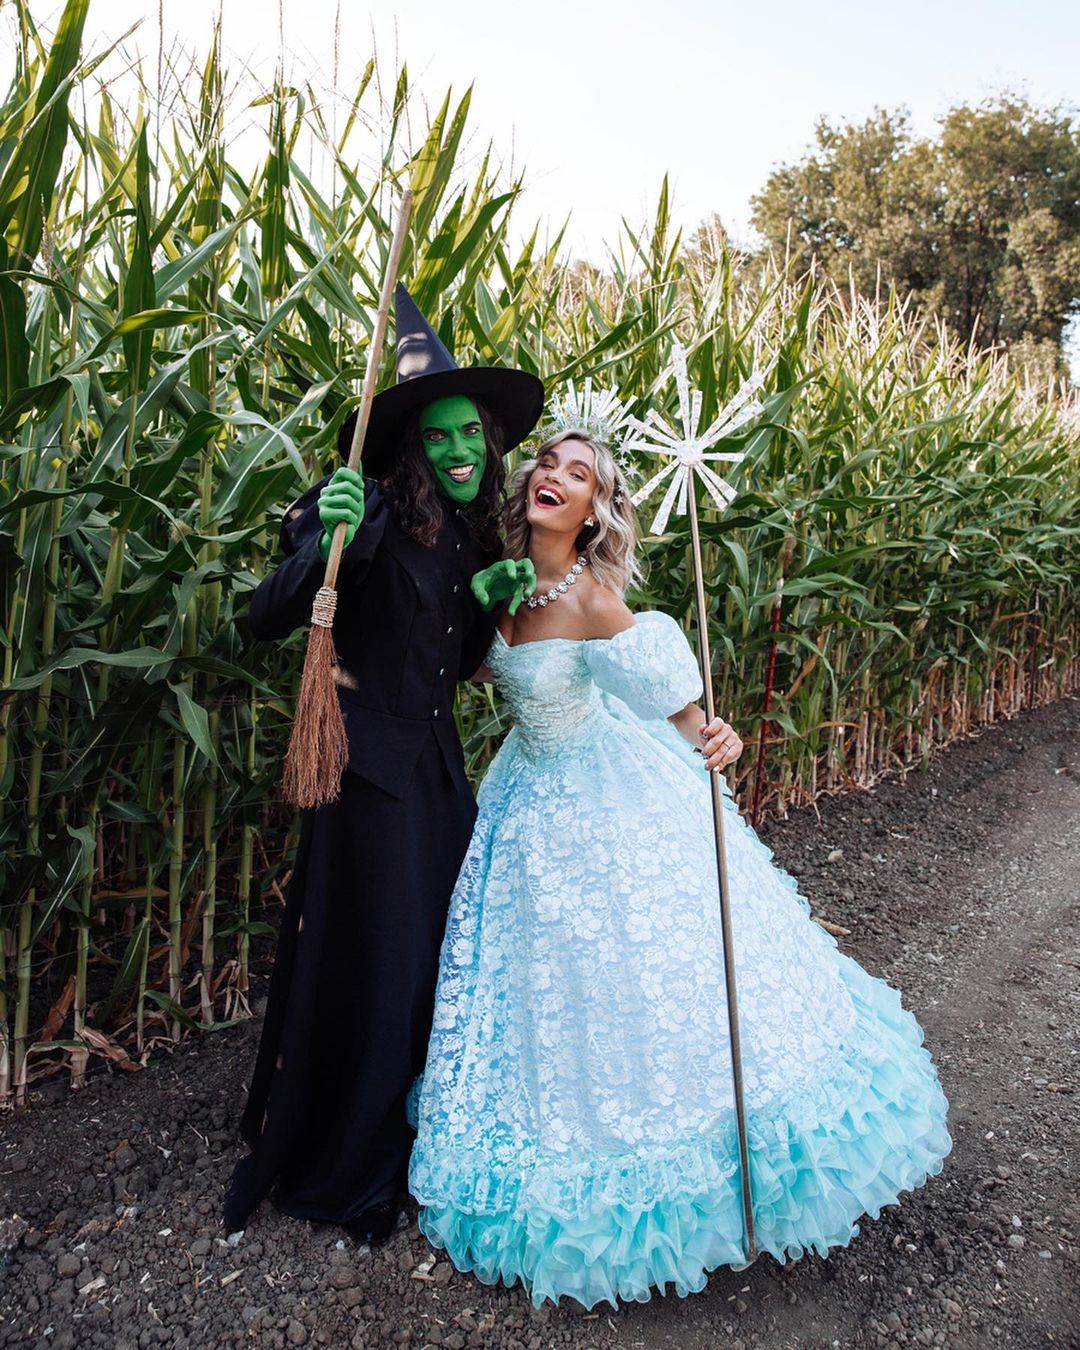 The Best 2021 Halloween Couple Costume Ideas